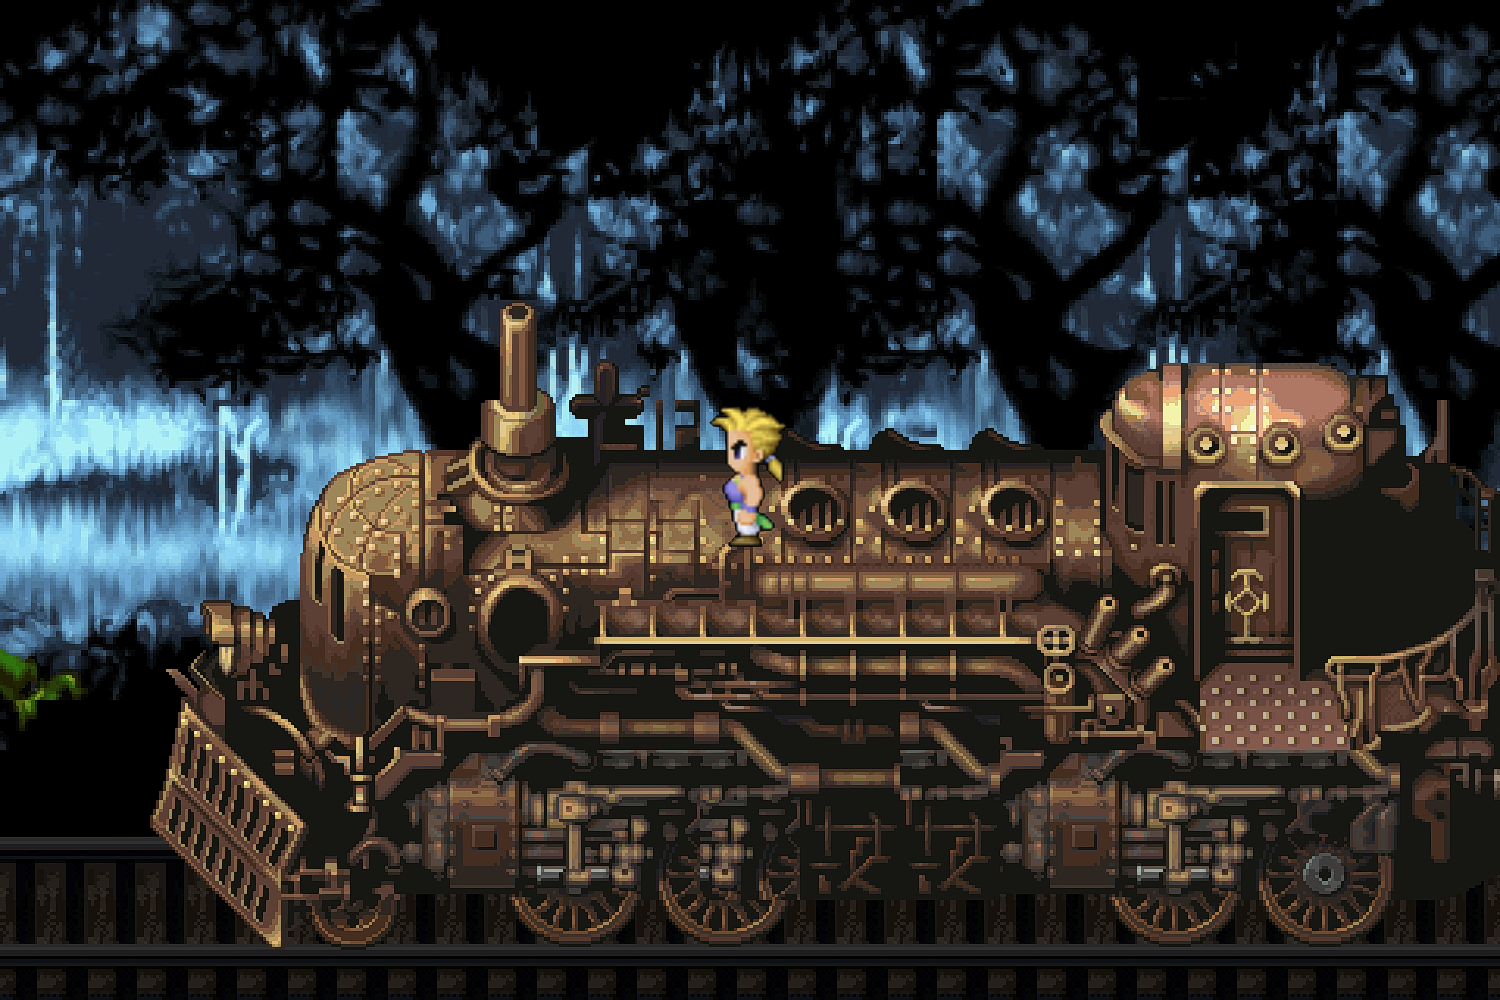 Phantom Train (Final Fantasy VI)